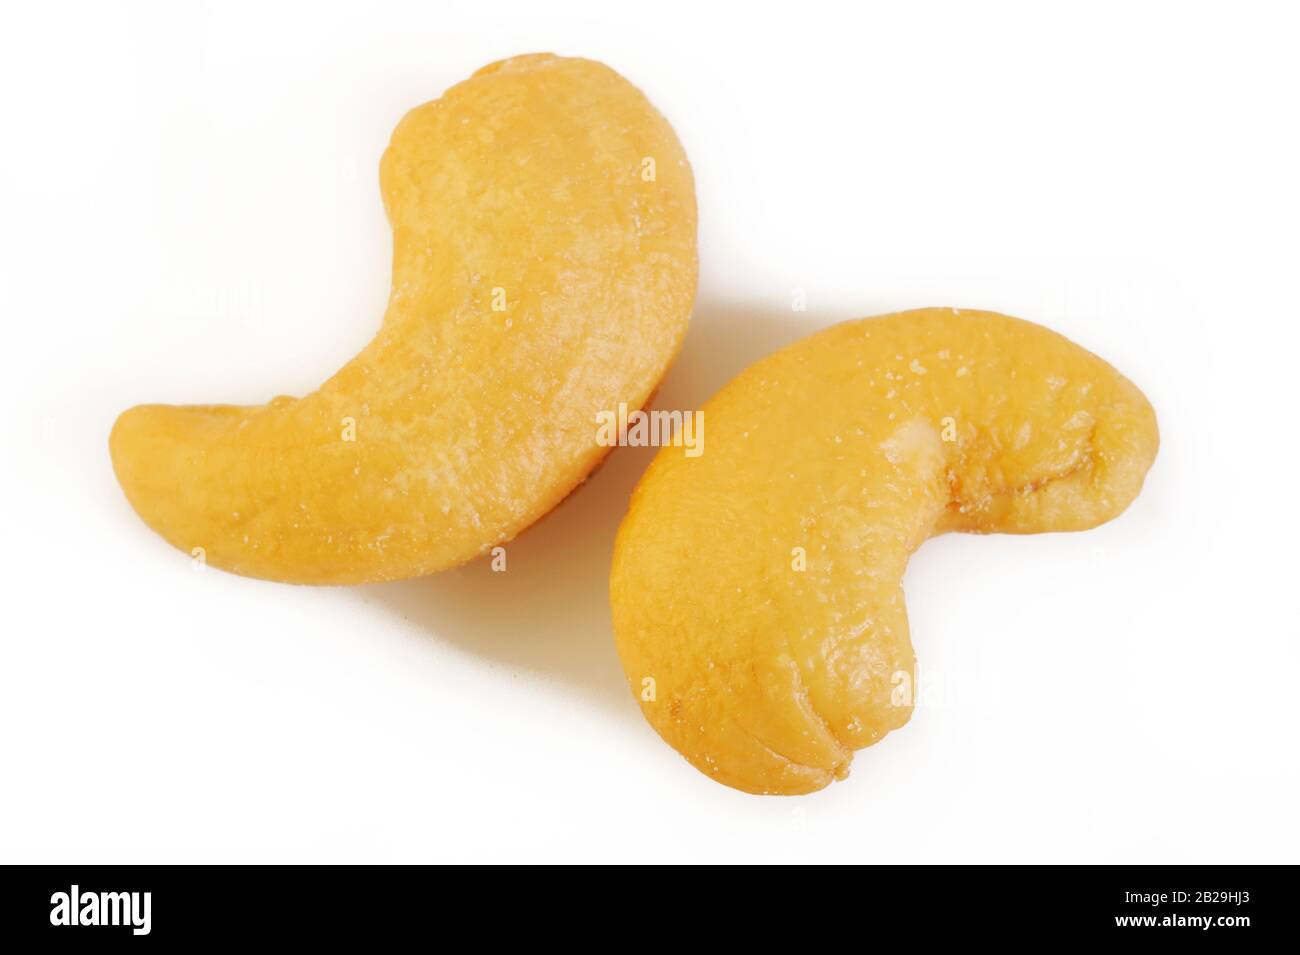 salted cashew nut on white background Stock Photo